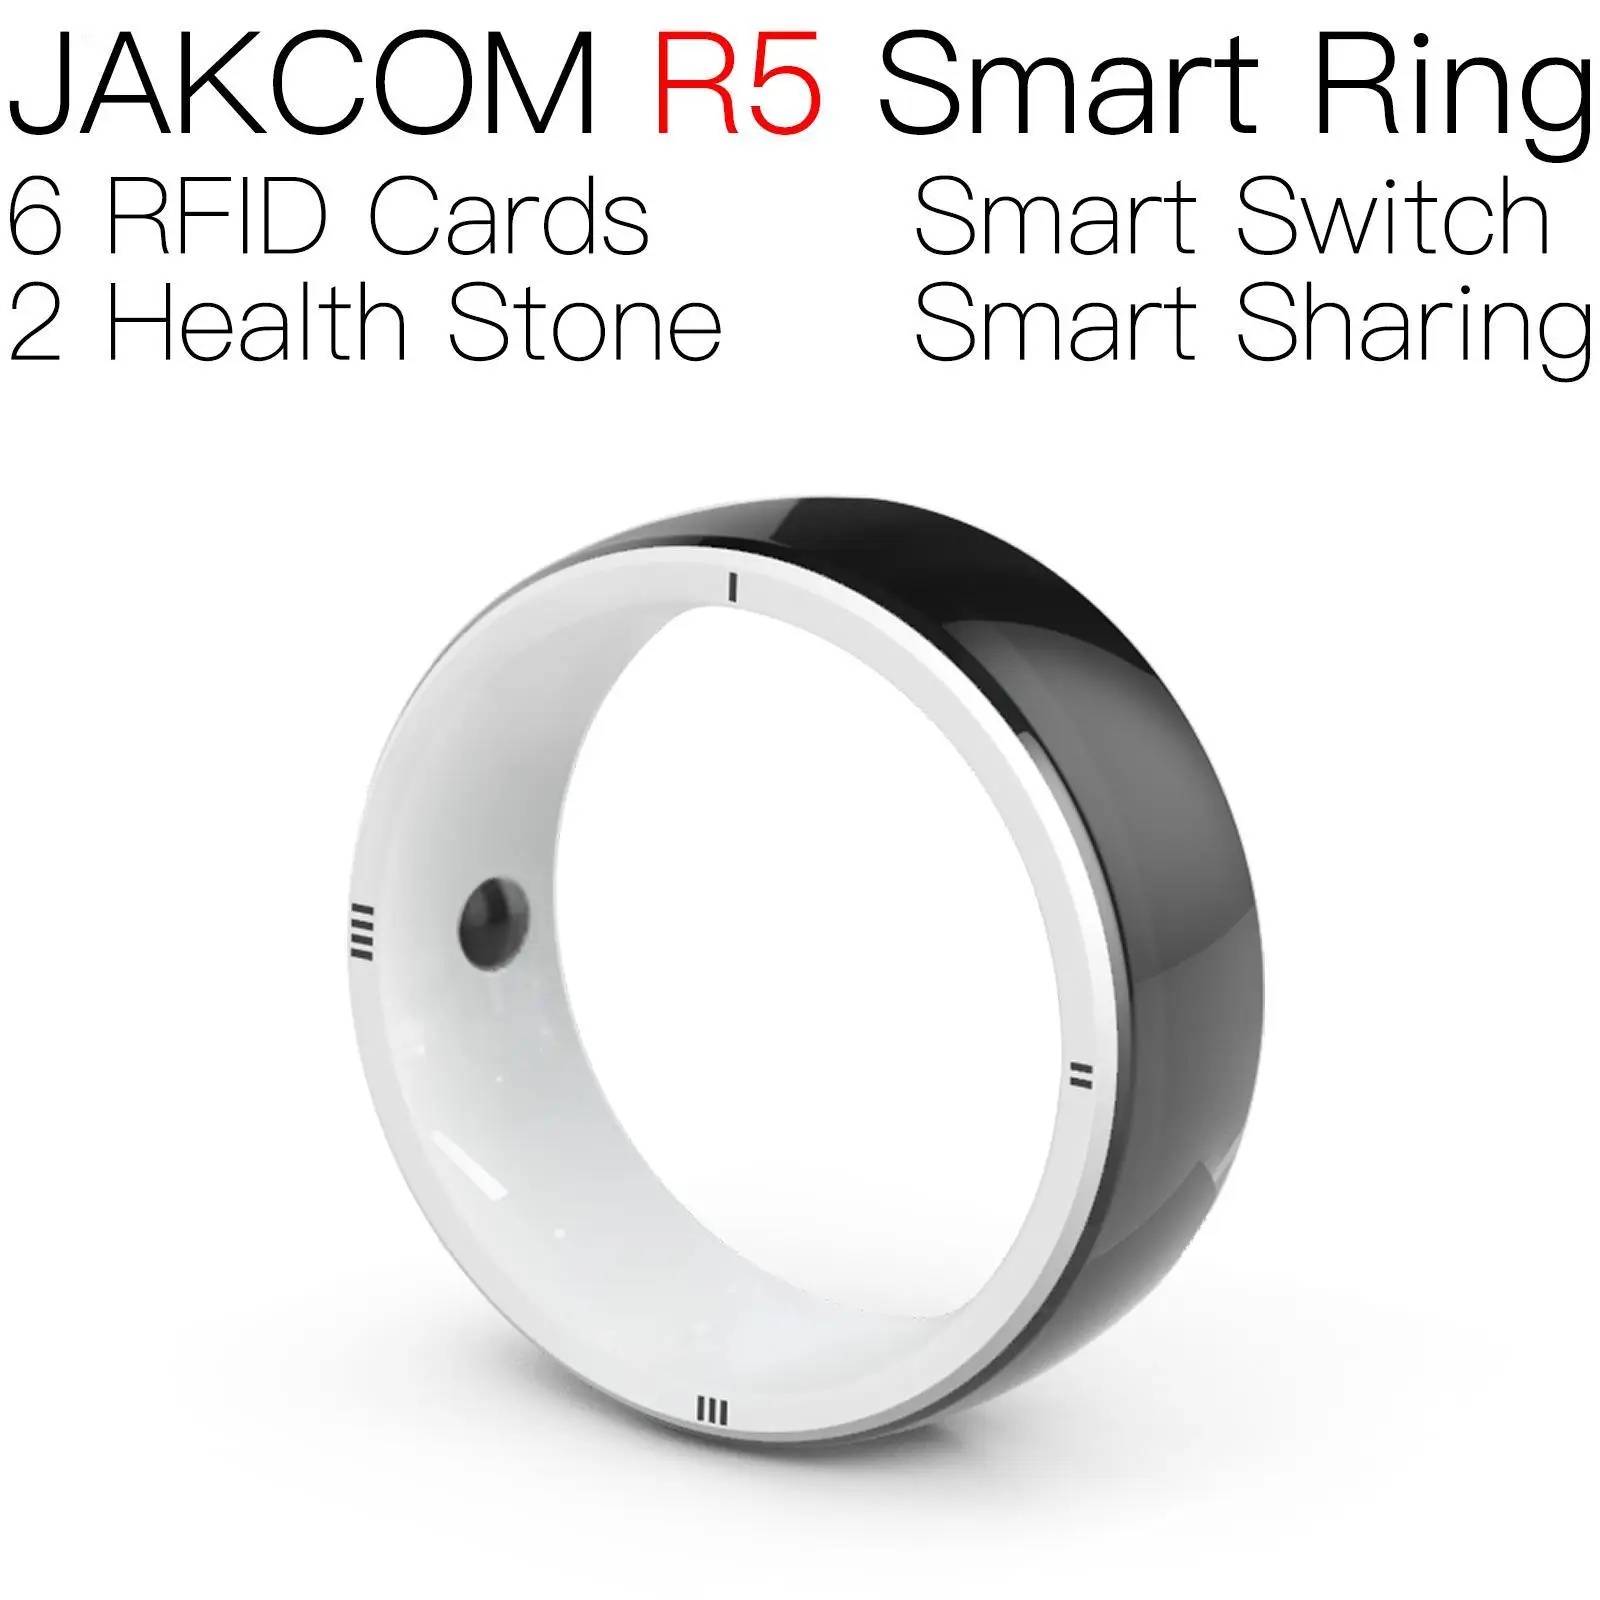 

JAKCOM R5 Smart Ring Nice than printer pixma ts207 cip key id44 rewritable rfid 125 chips for animals nfc business cards